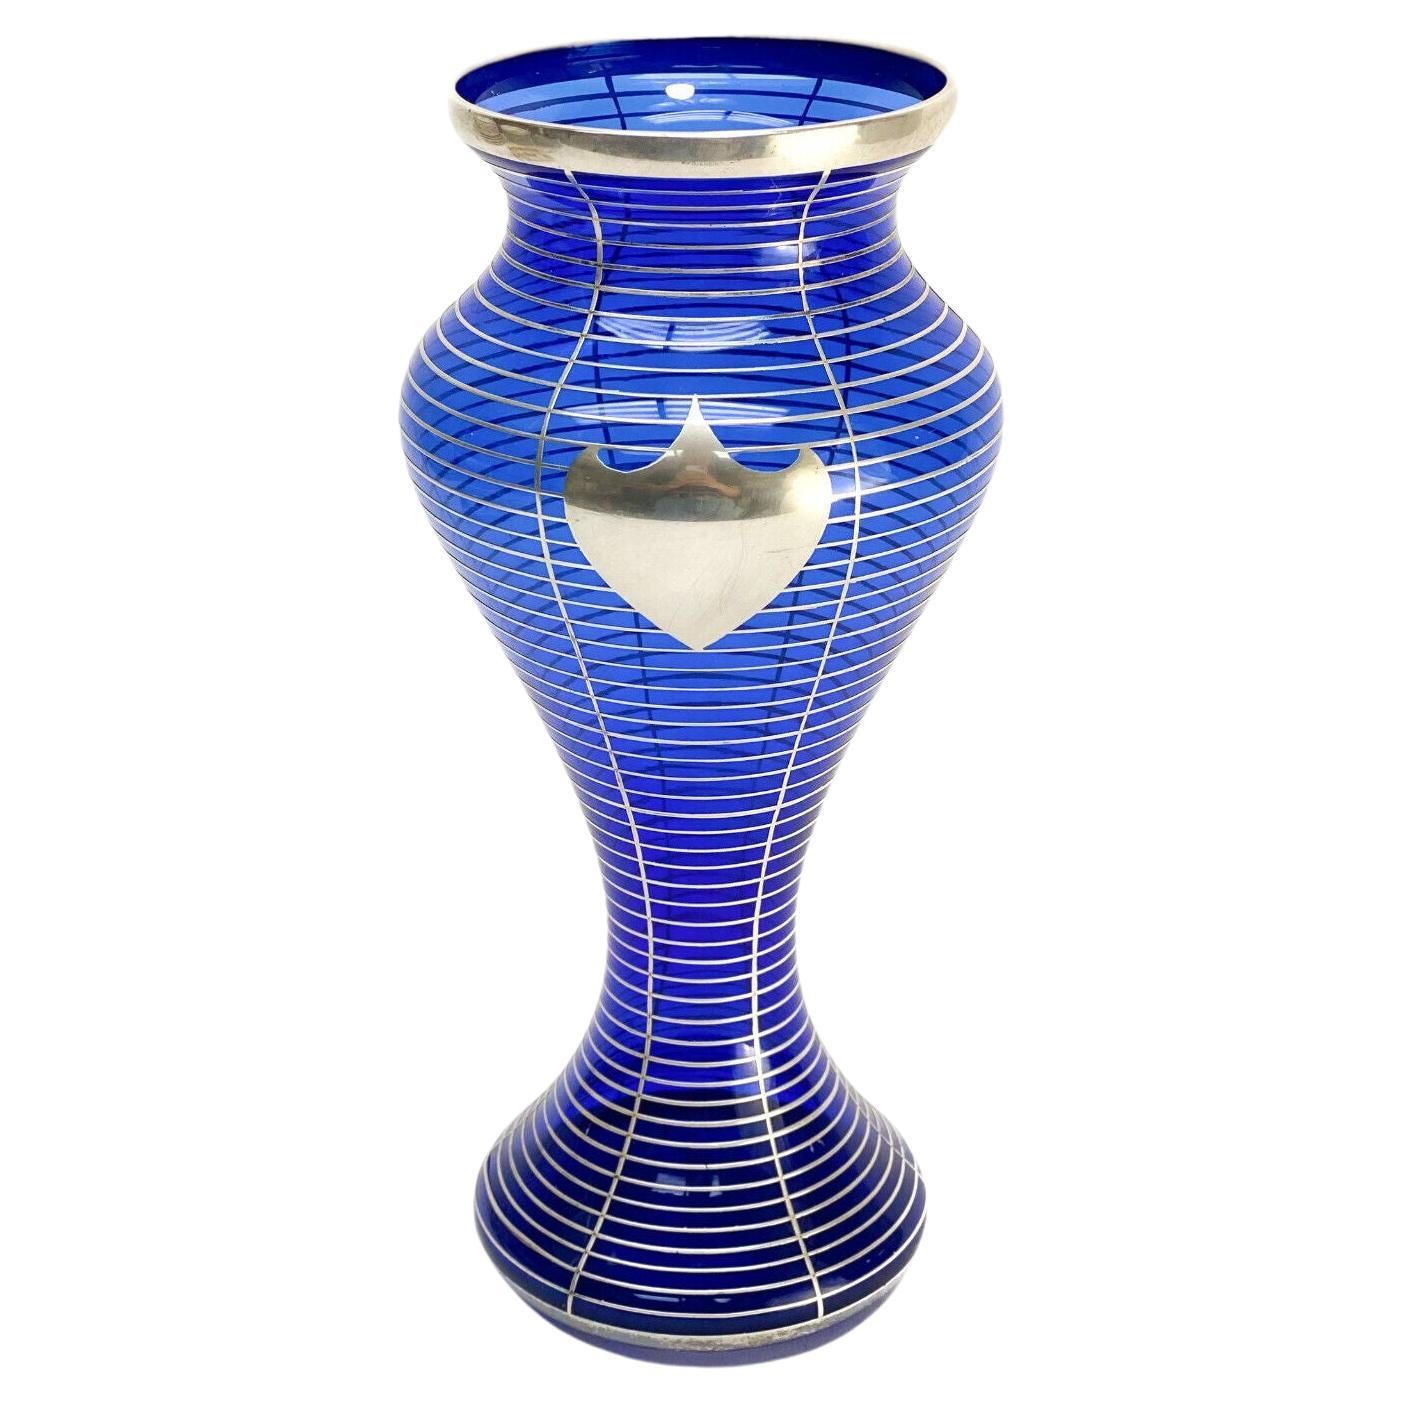 American La Pierre Silver Overlay Cobalt Blue Glass Vase, circa 1910 For Sale